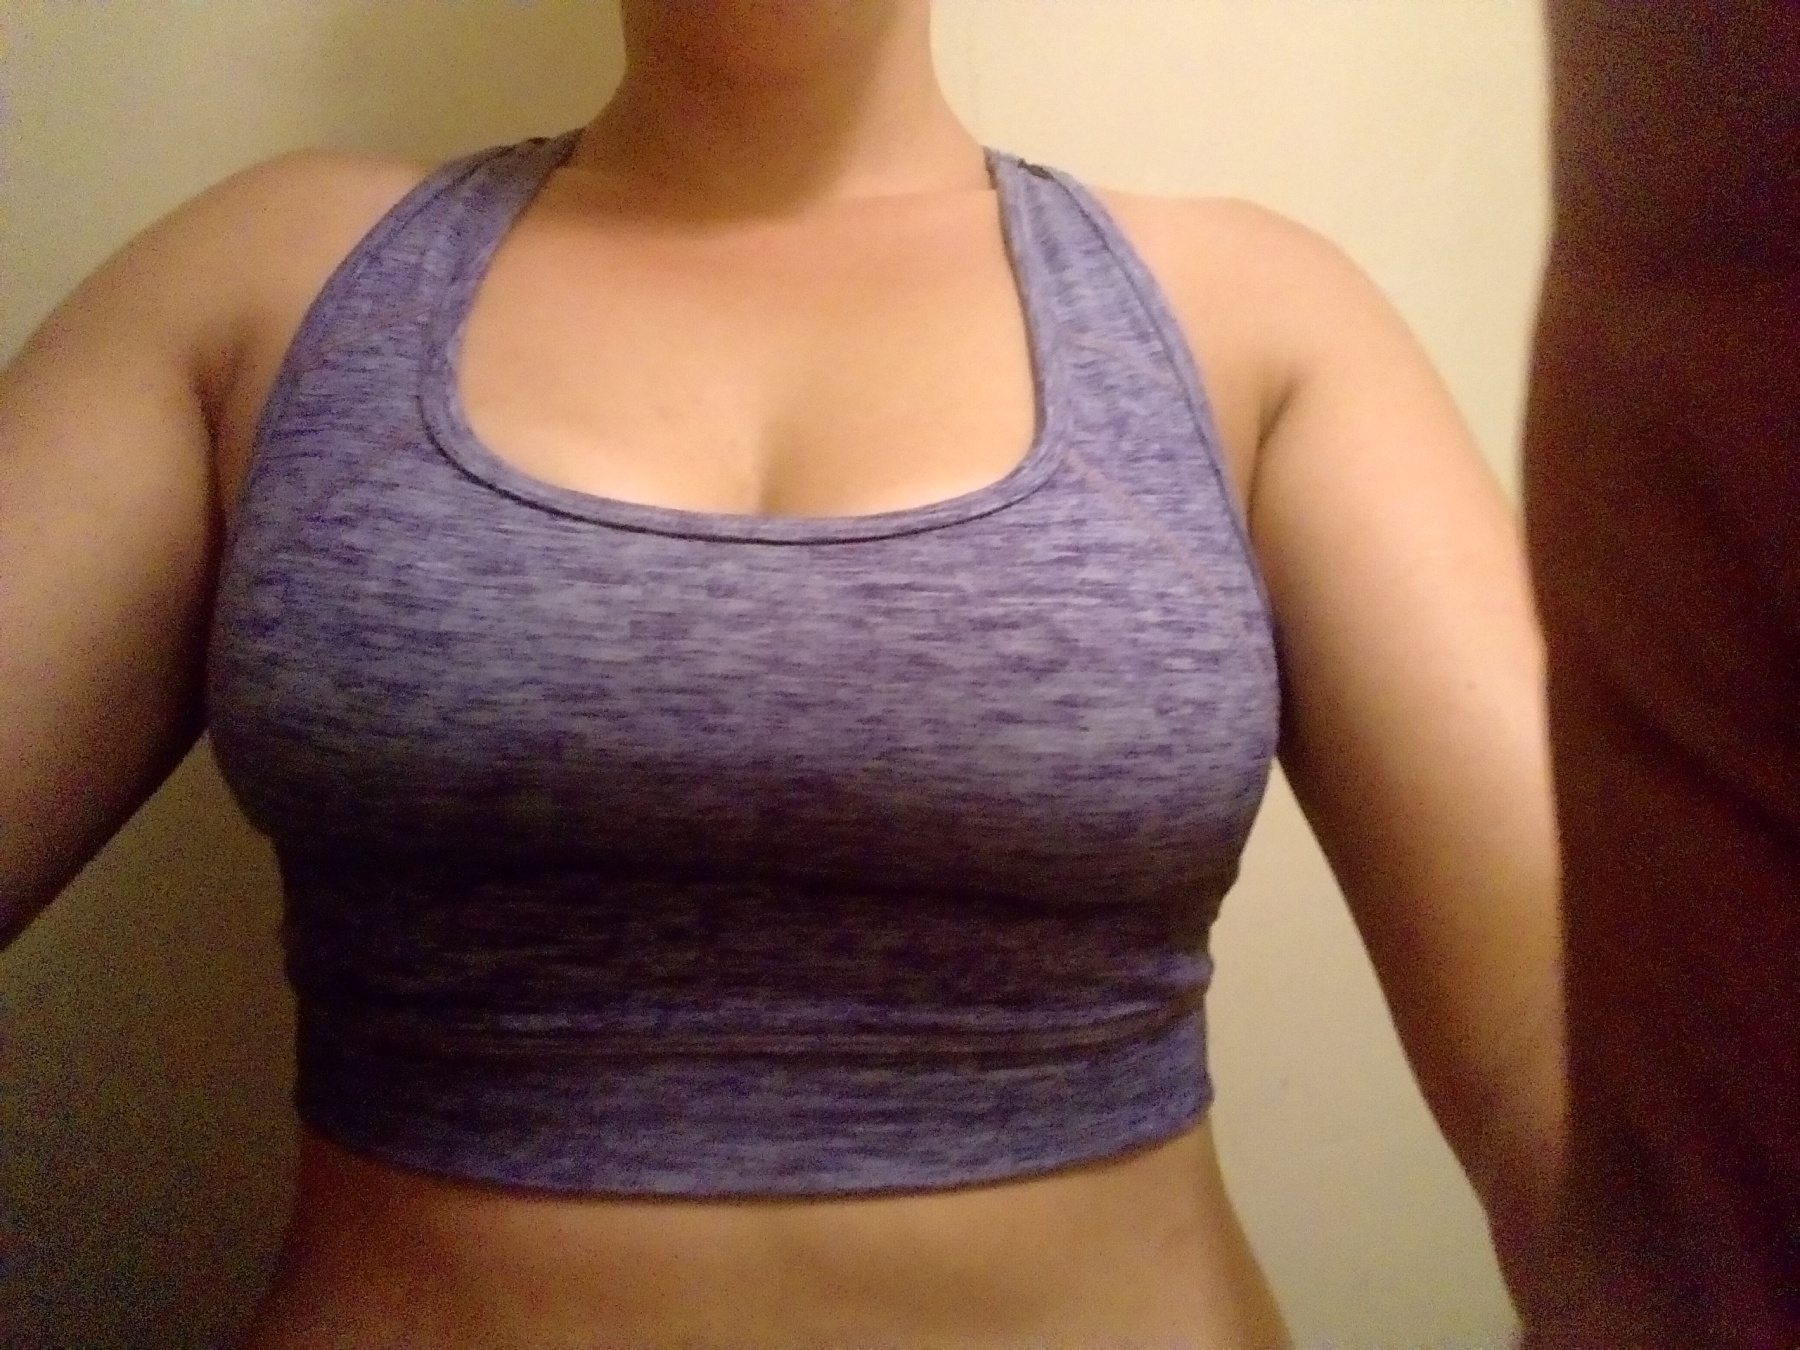 Used sports bra